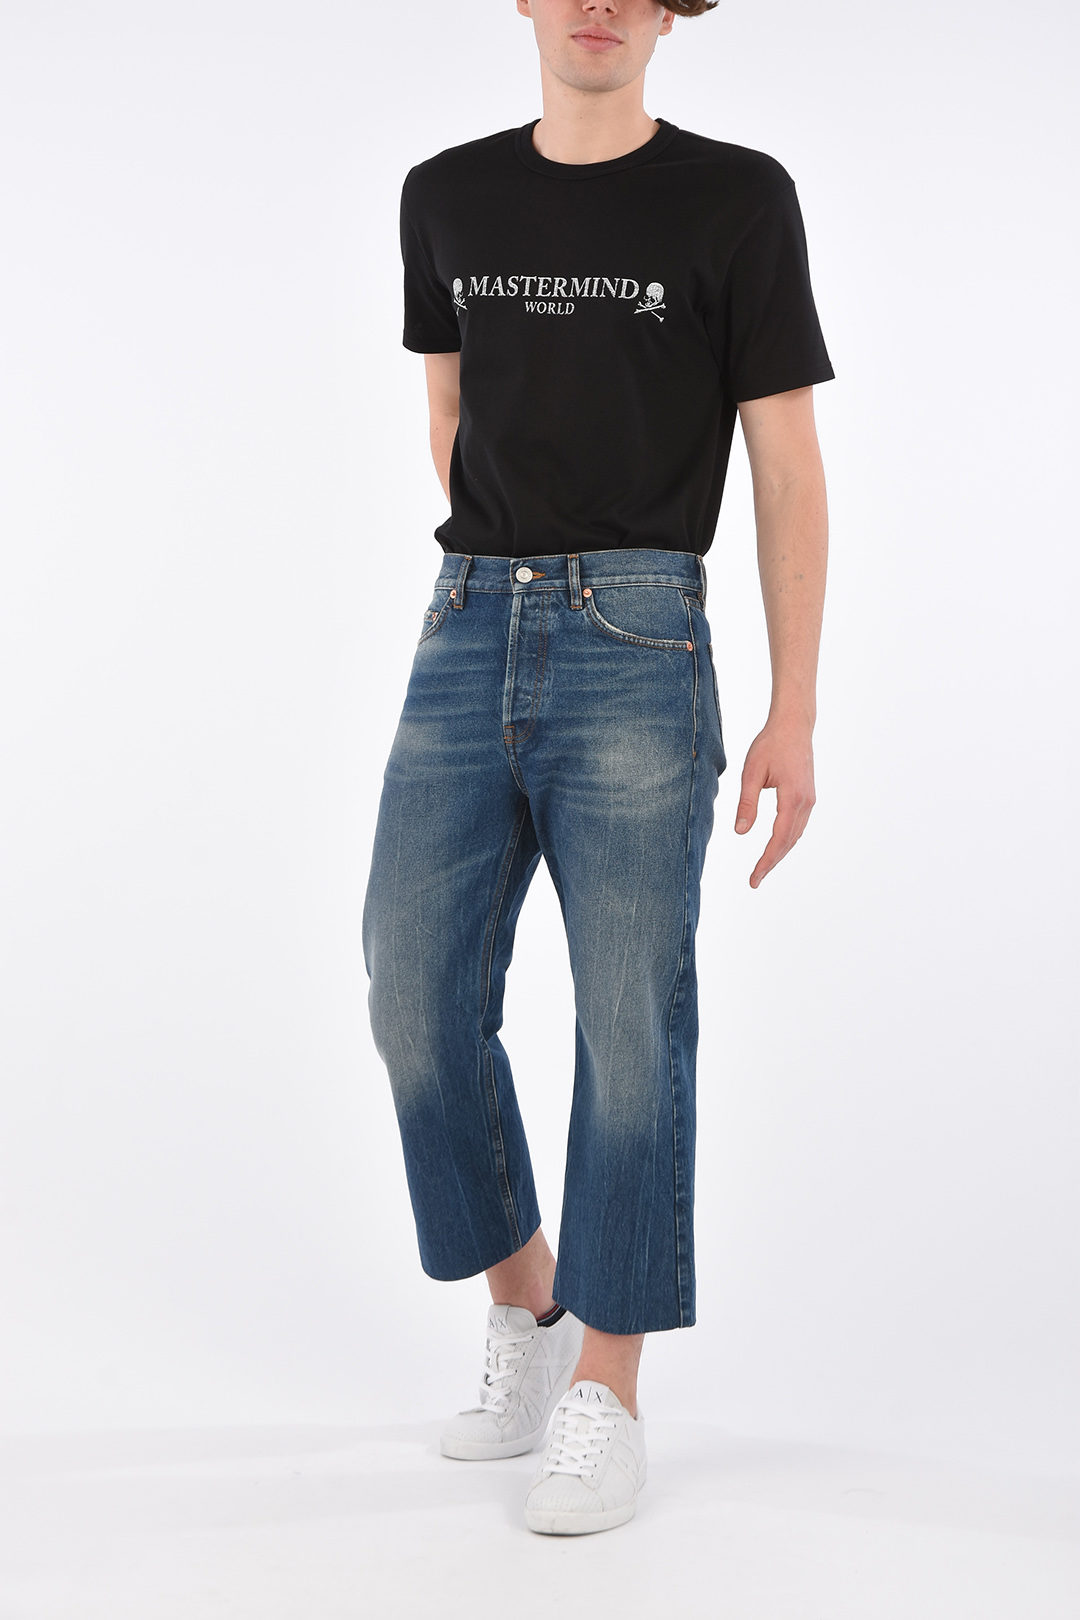 LRG Lifted Research Group Mens Jeans 34 Blue Cropped Denim Flap Pockets  Capri | eBay